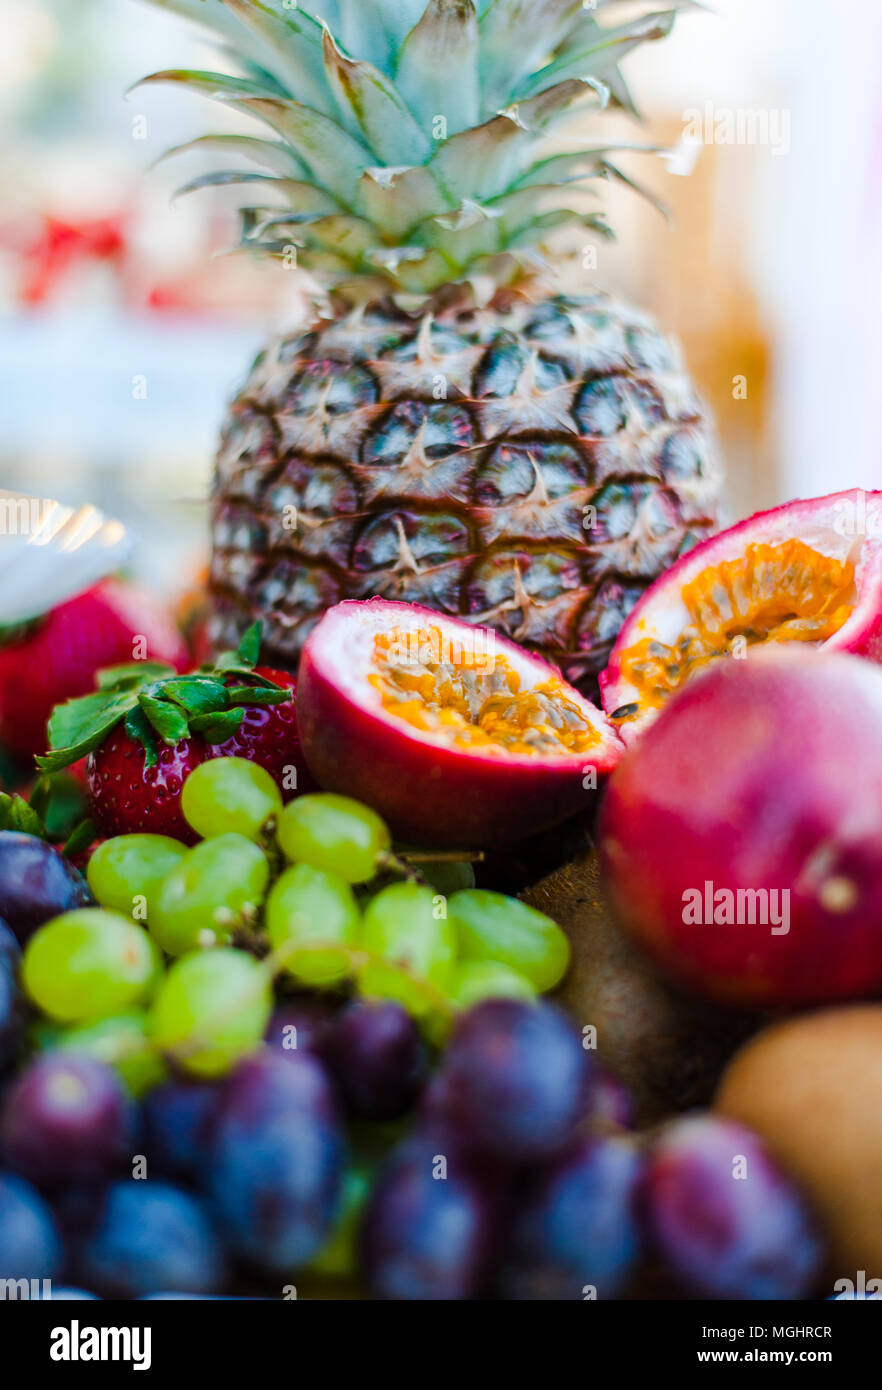 Mixed fresh fruits Stock Photo